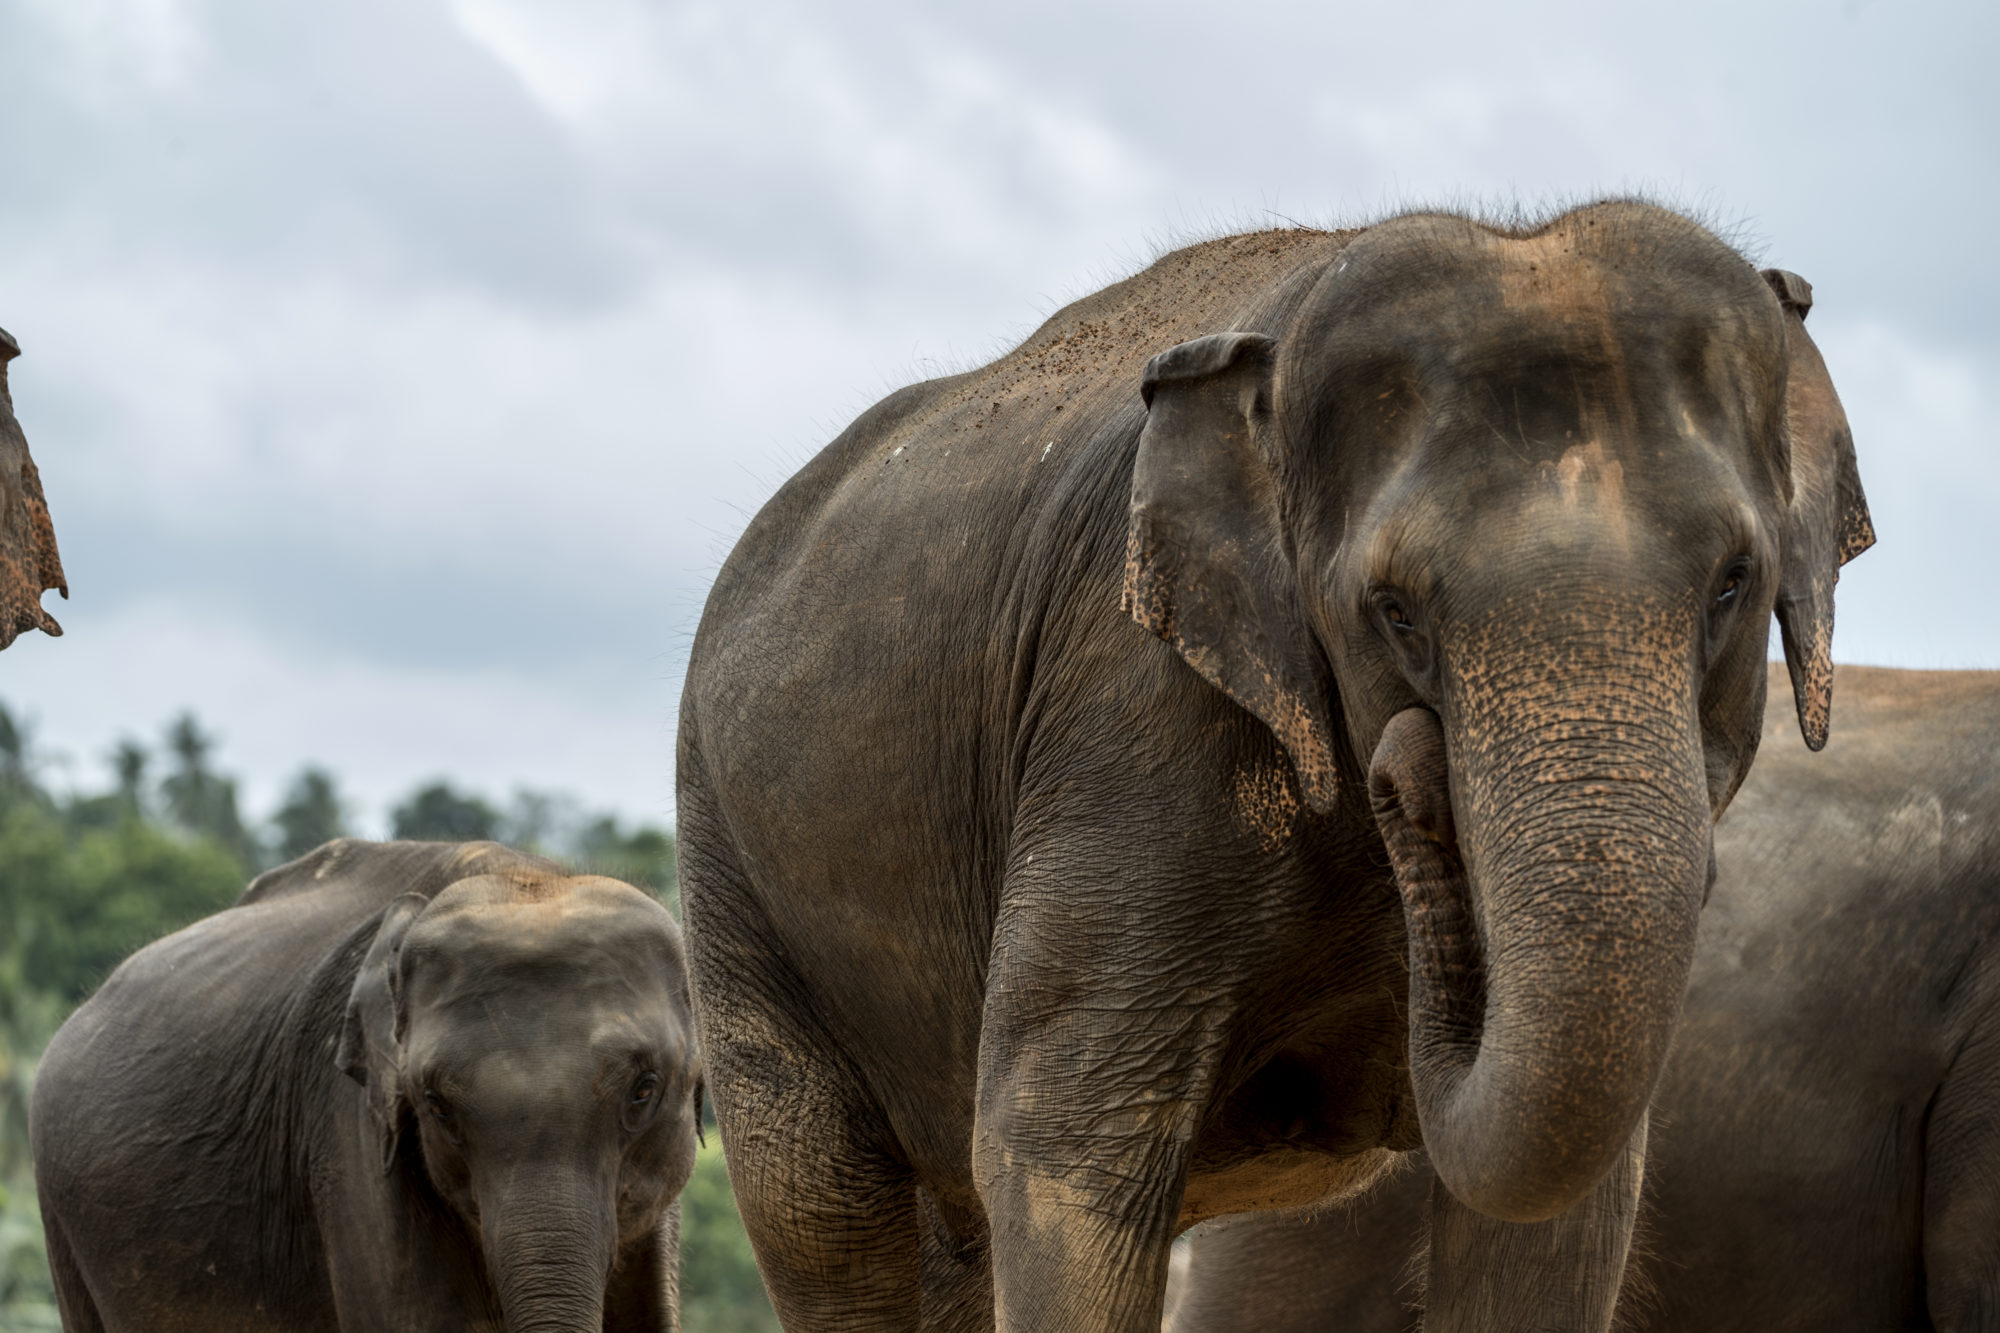 Foto di pinnawala, centro di recupero elefanti